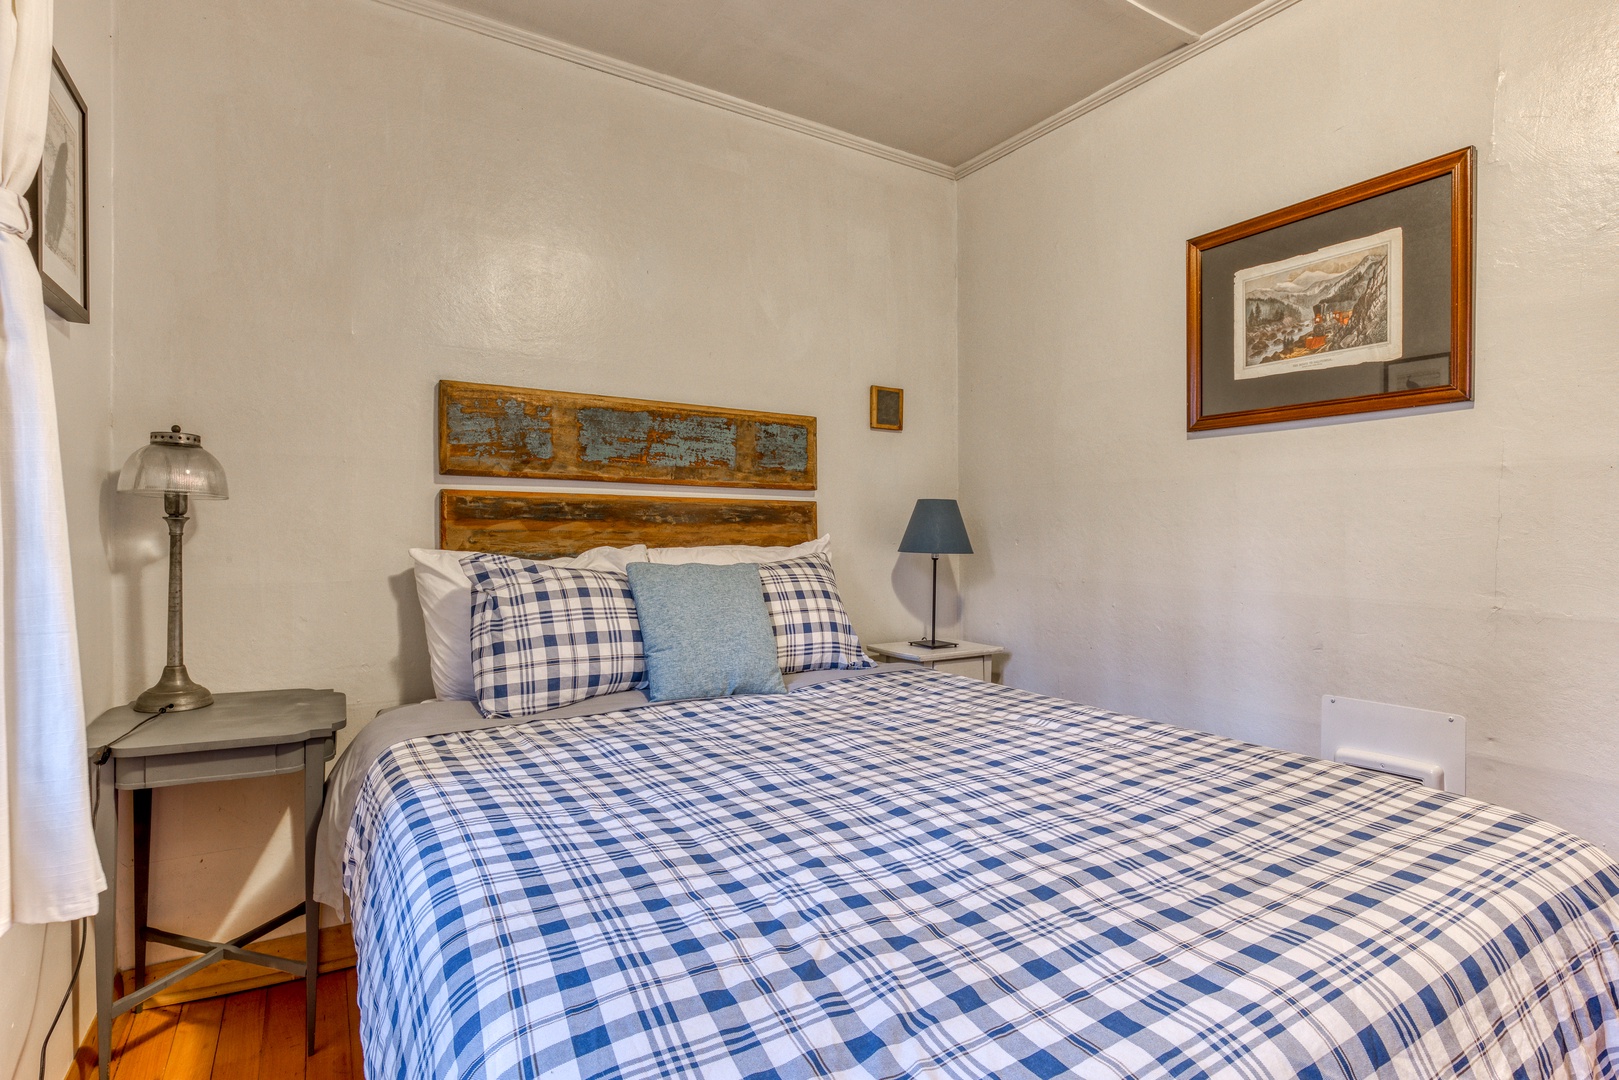 Brightwood Vacation Rentals, Springbrook Cabin - Guest bedroom with queen bed